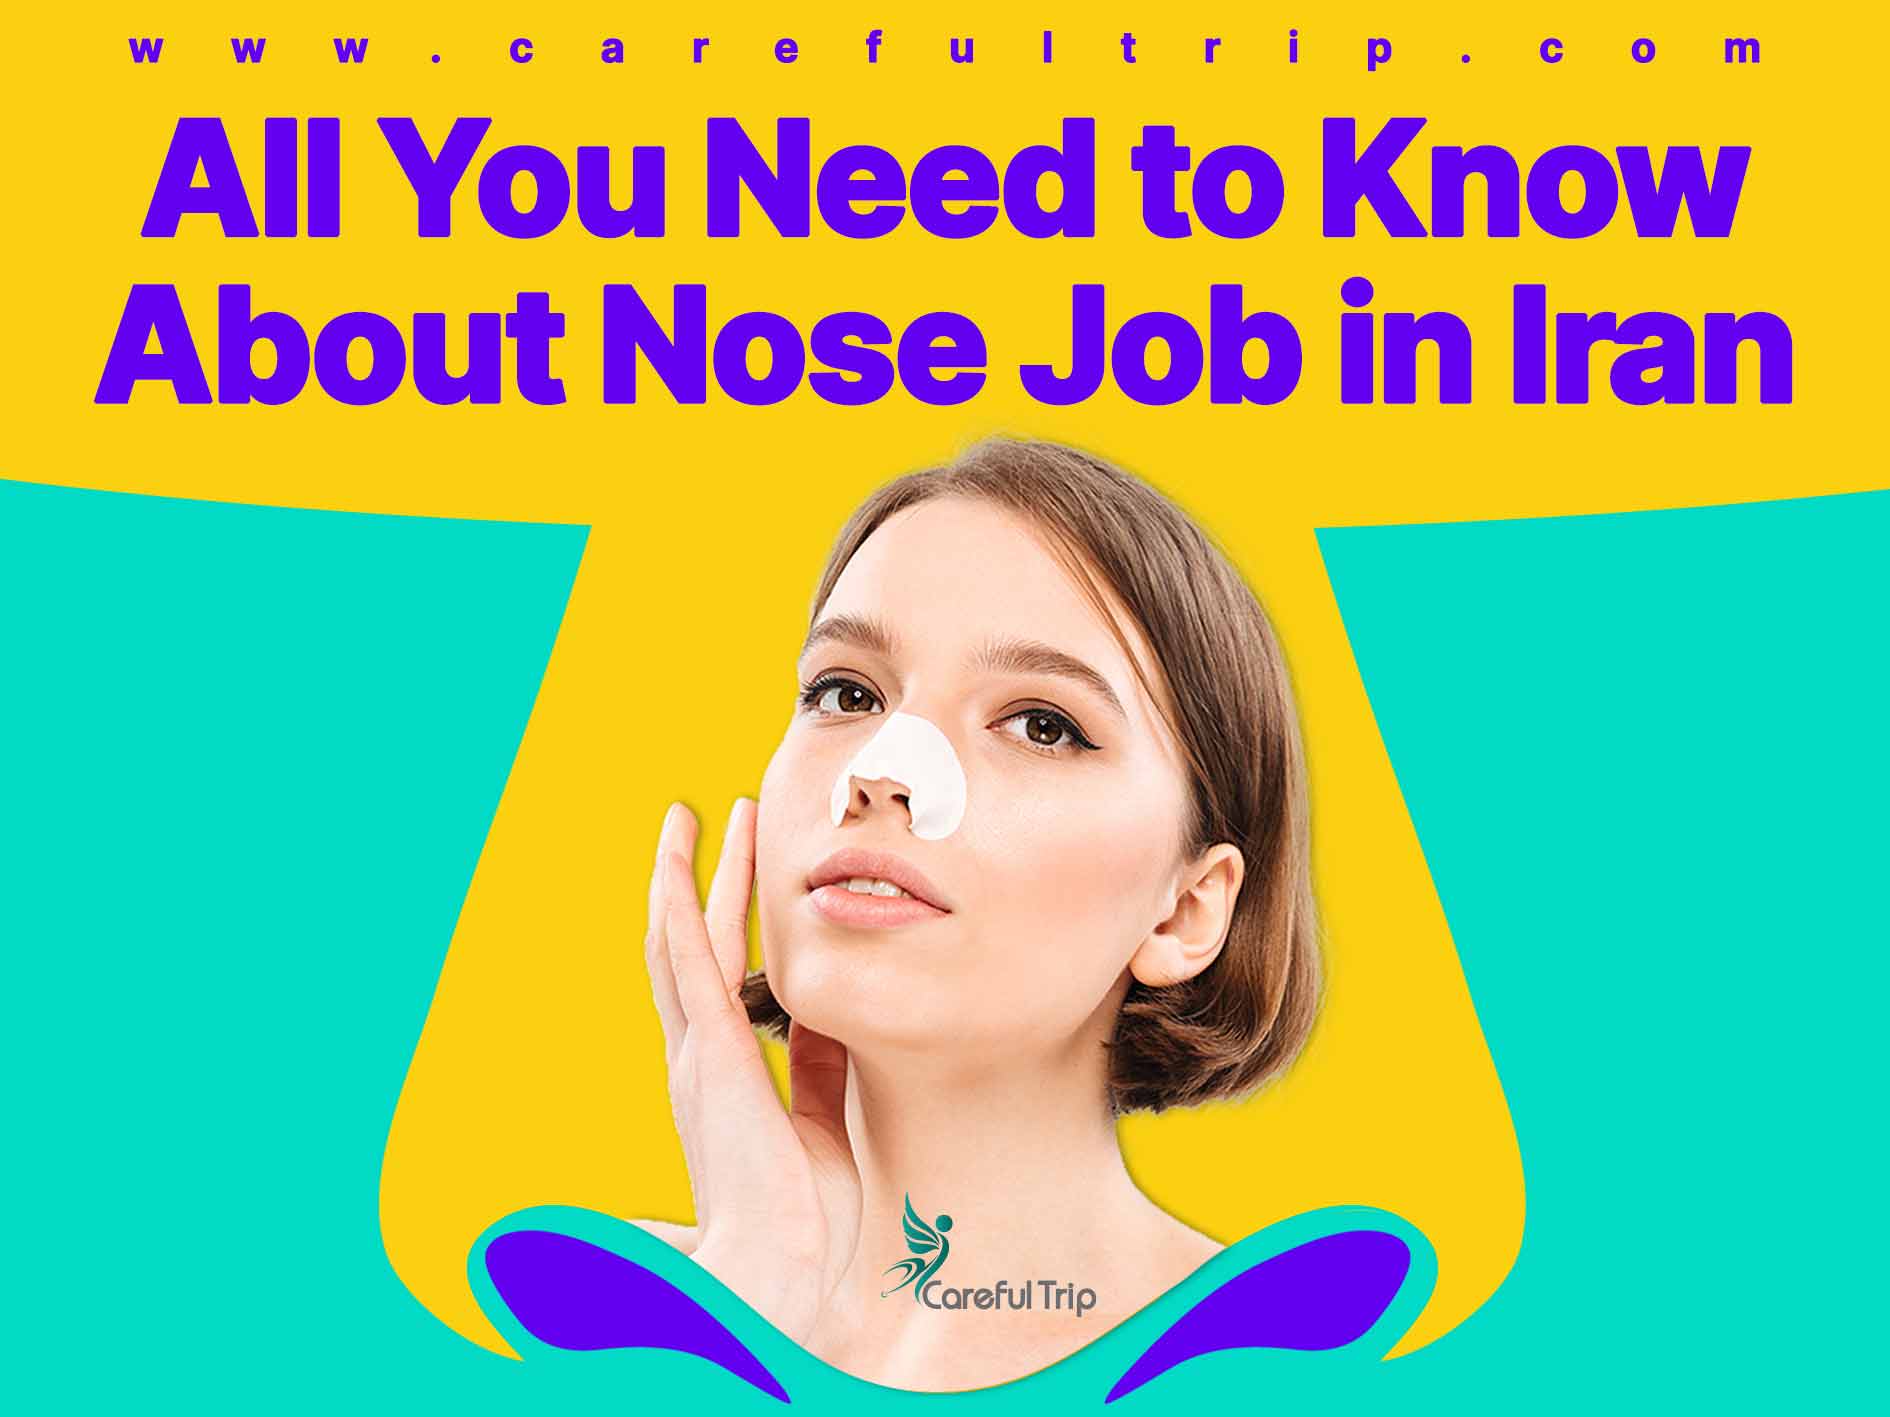 Nose job in Iran